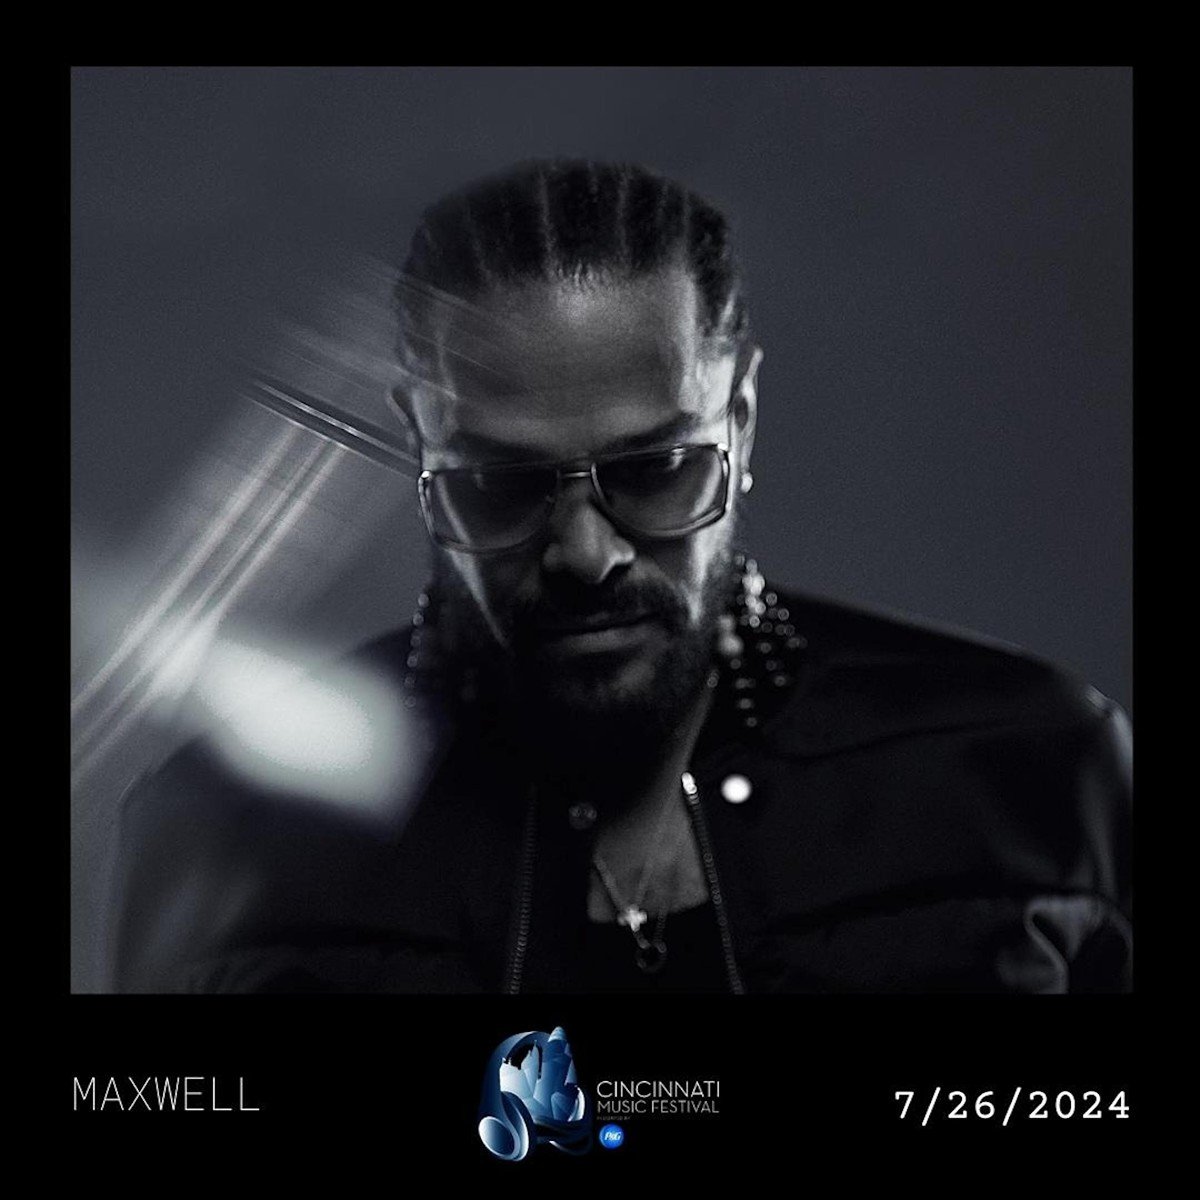 Maxwell will be headlining the 2024 Cincinnati Music Festival